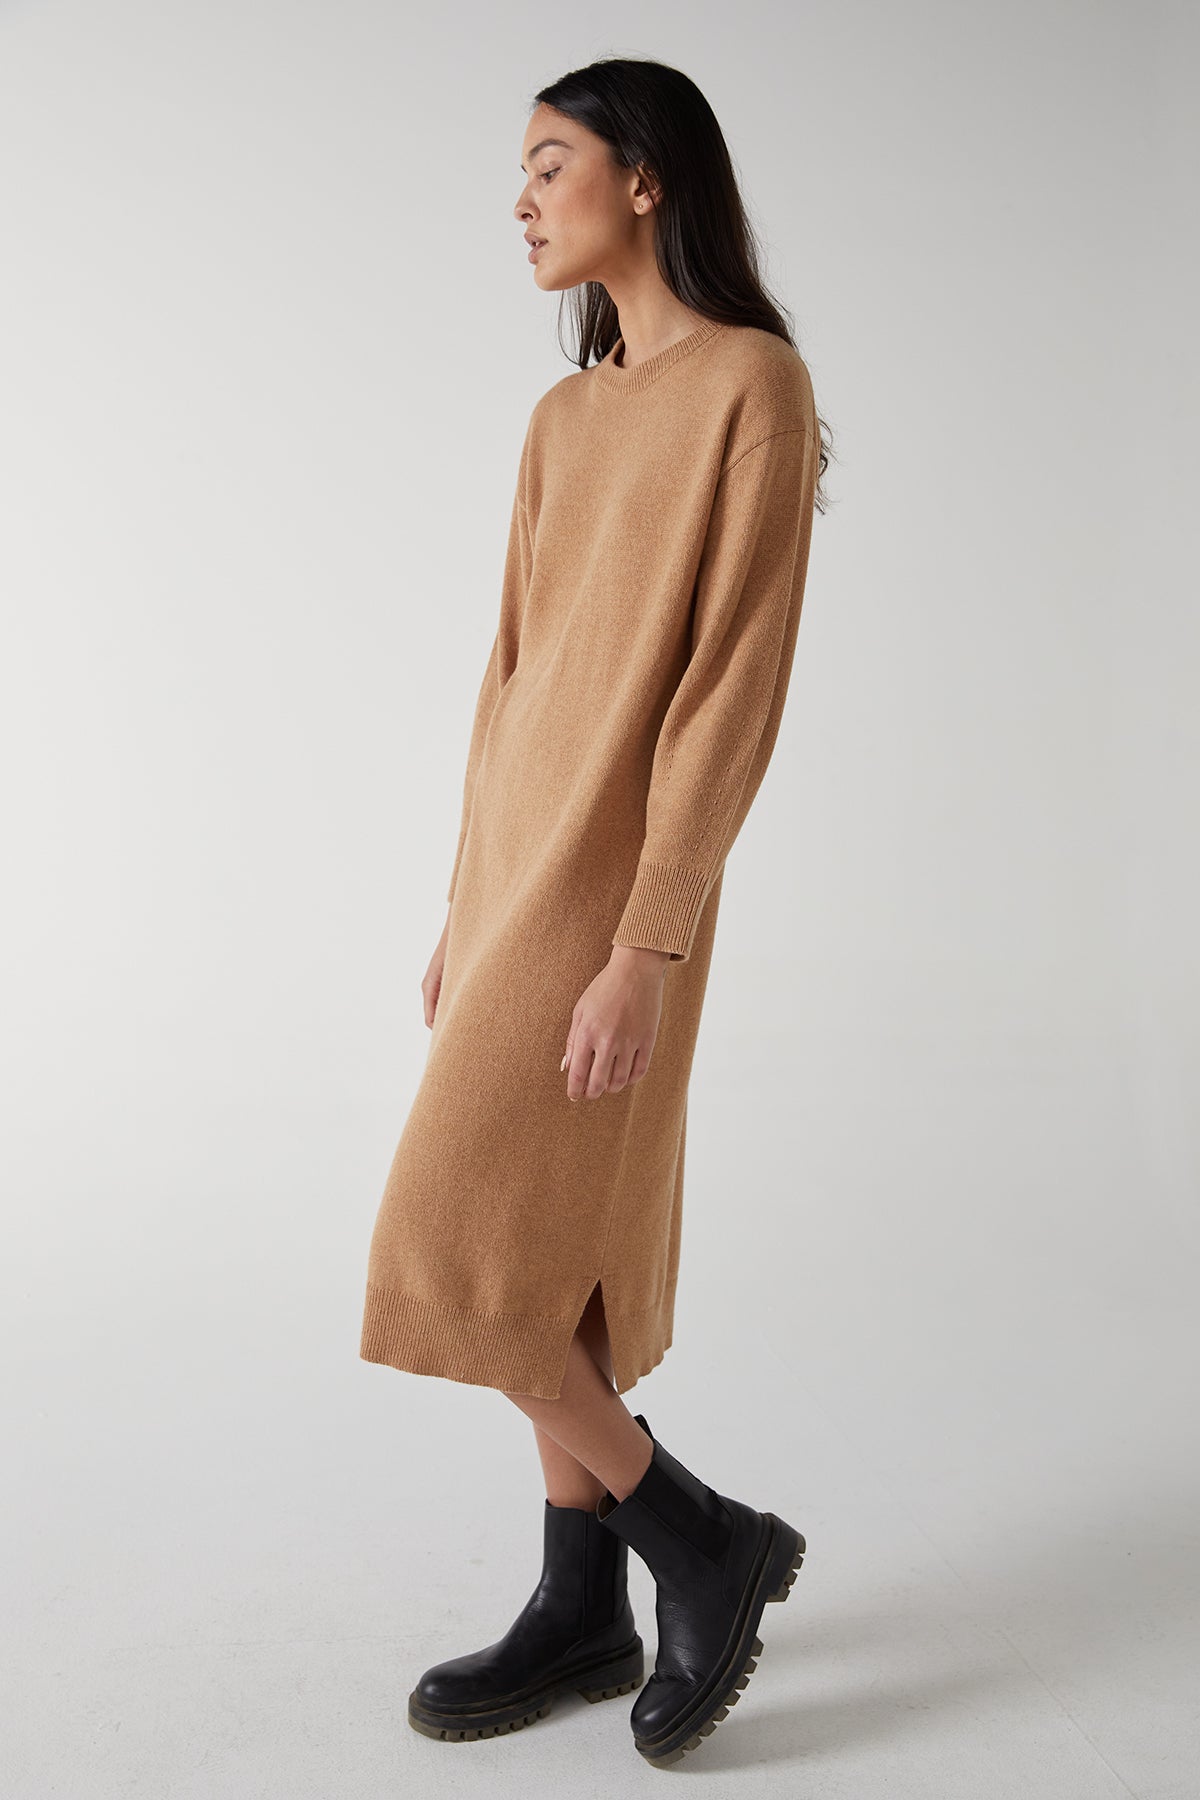 The model is wearing a Velvet by Jenny Graham LAUREL DRESS with side hem slits.-25315843899585